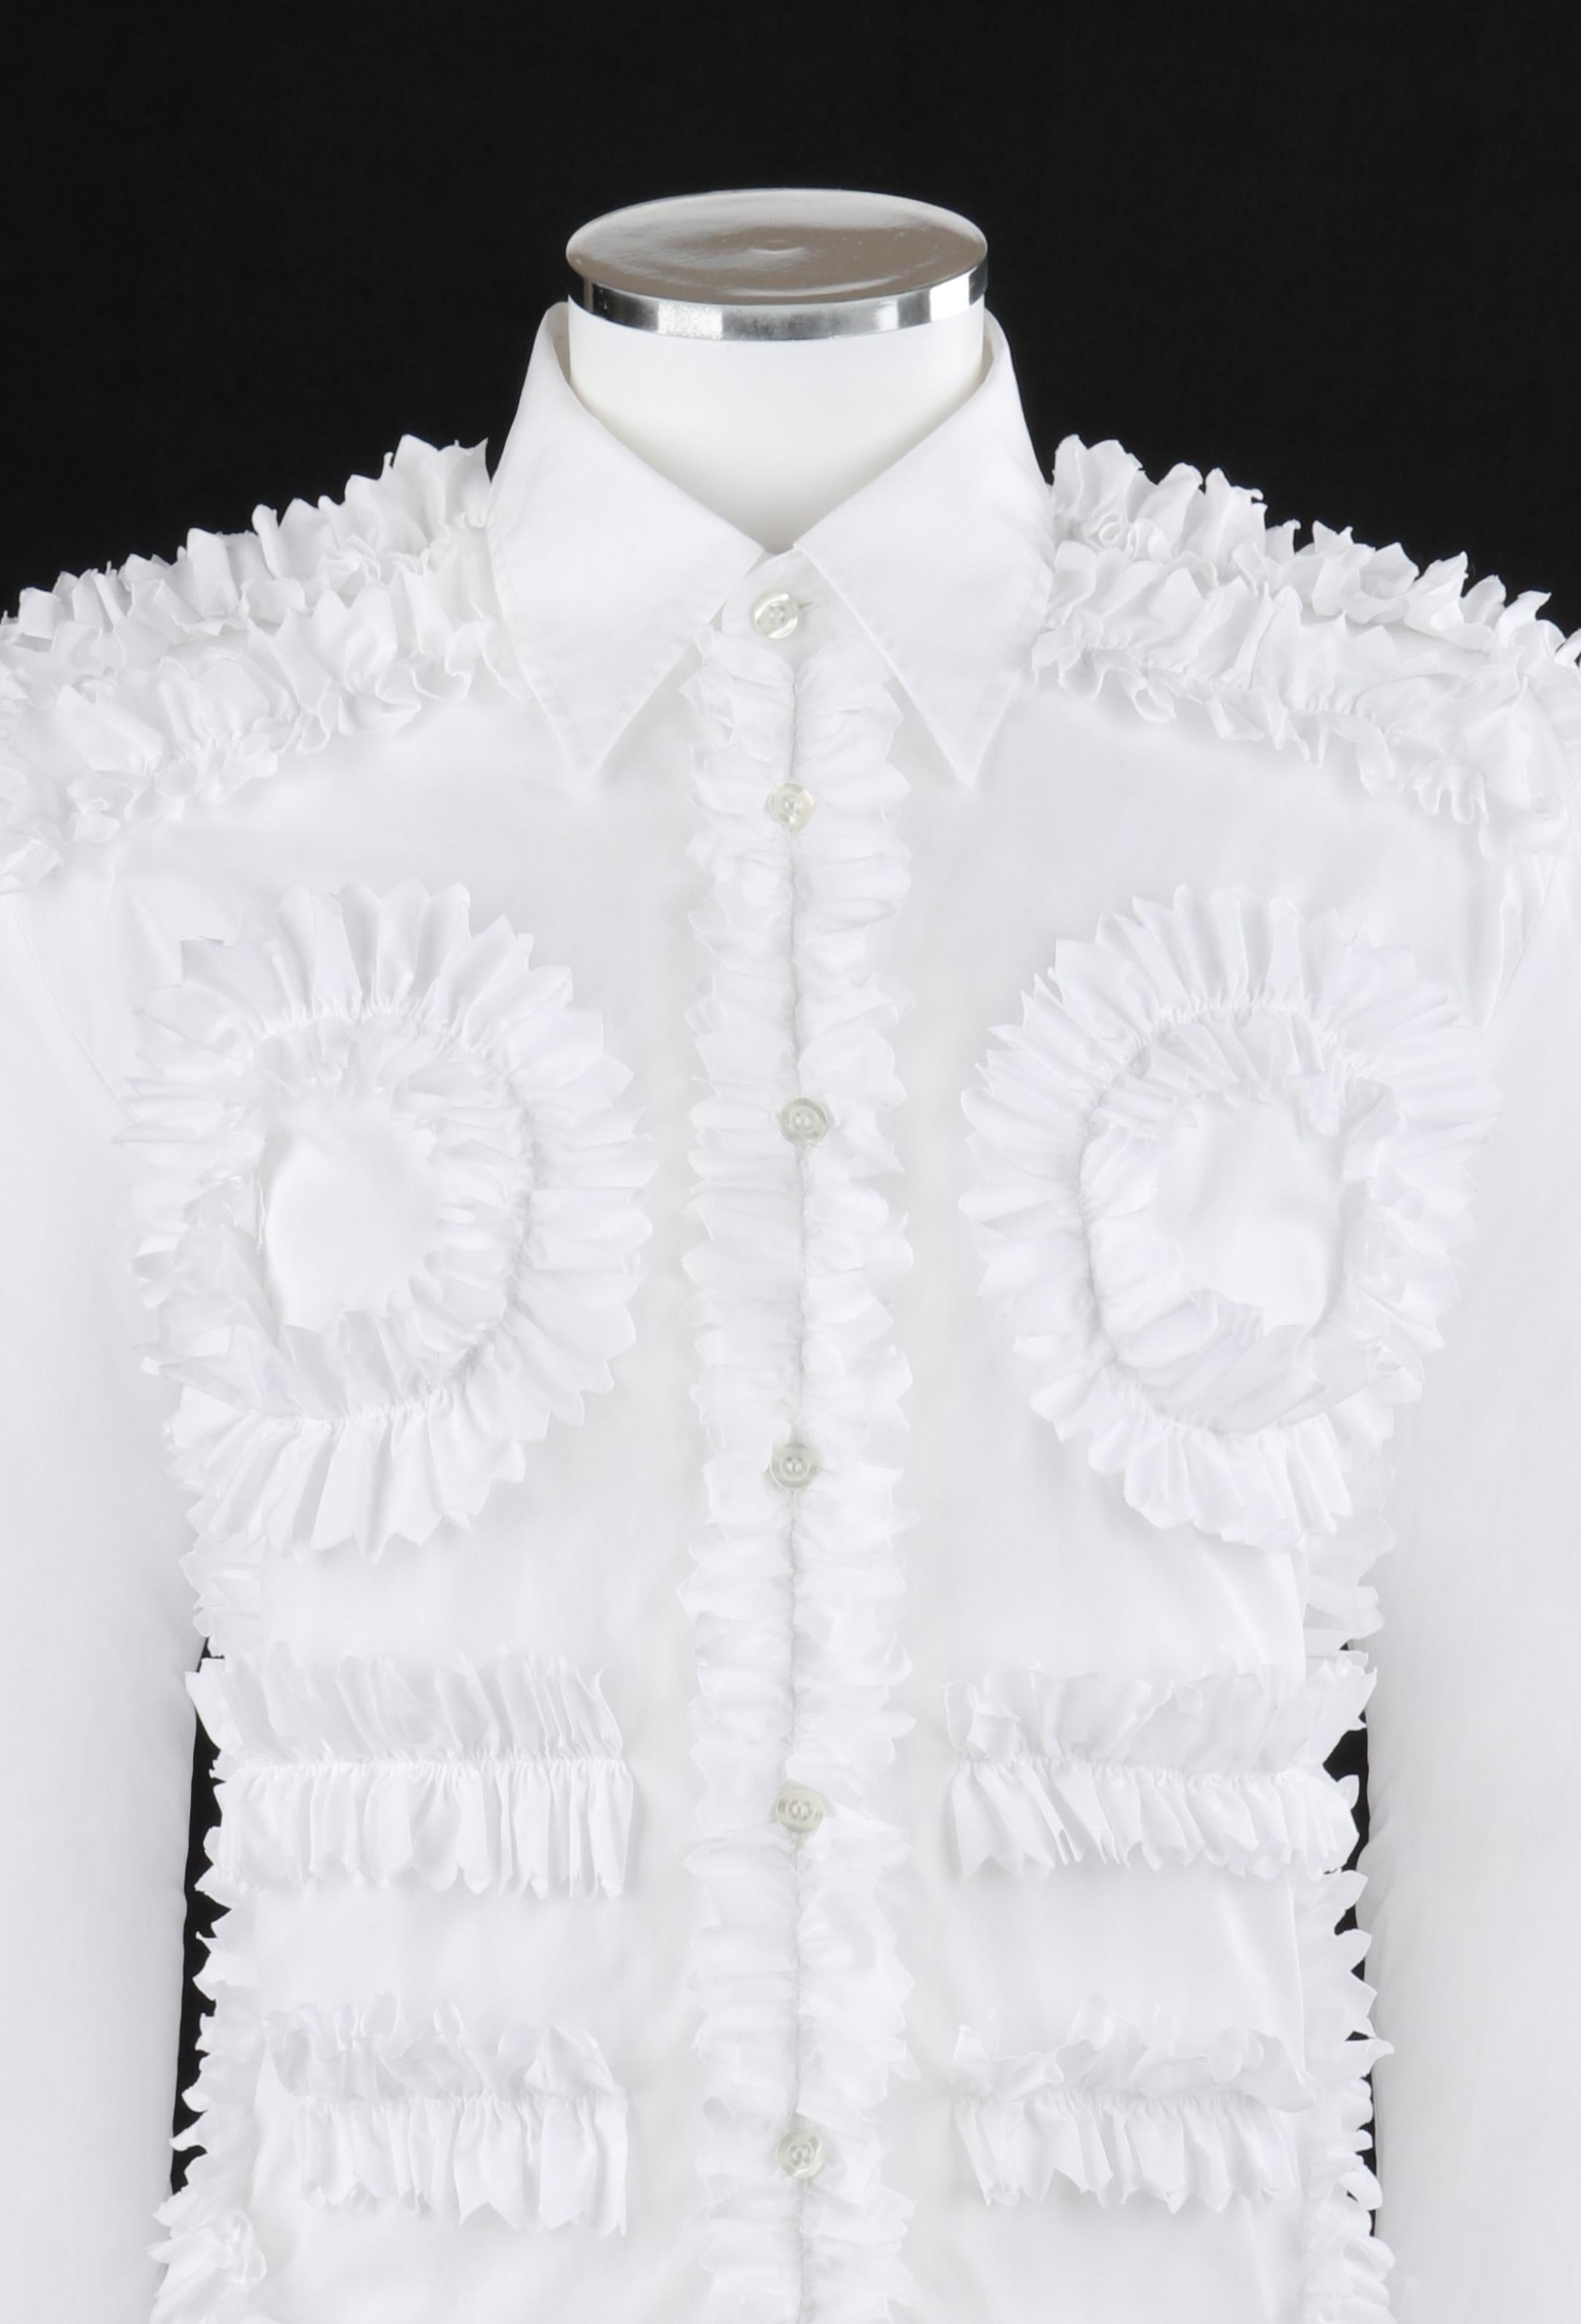 Gray WALTER VAN BEIRENDONCK A/W 2014 Men's Symmetric White Ruffle Button Front Shirt  For Sale